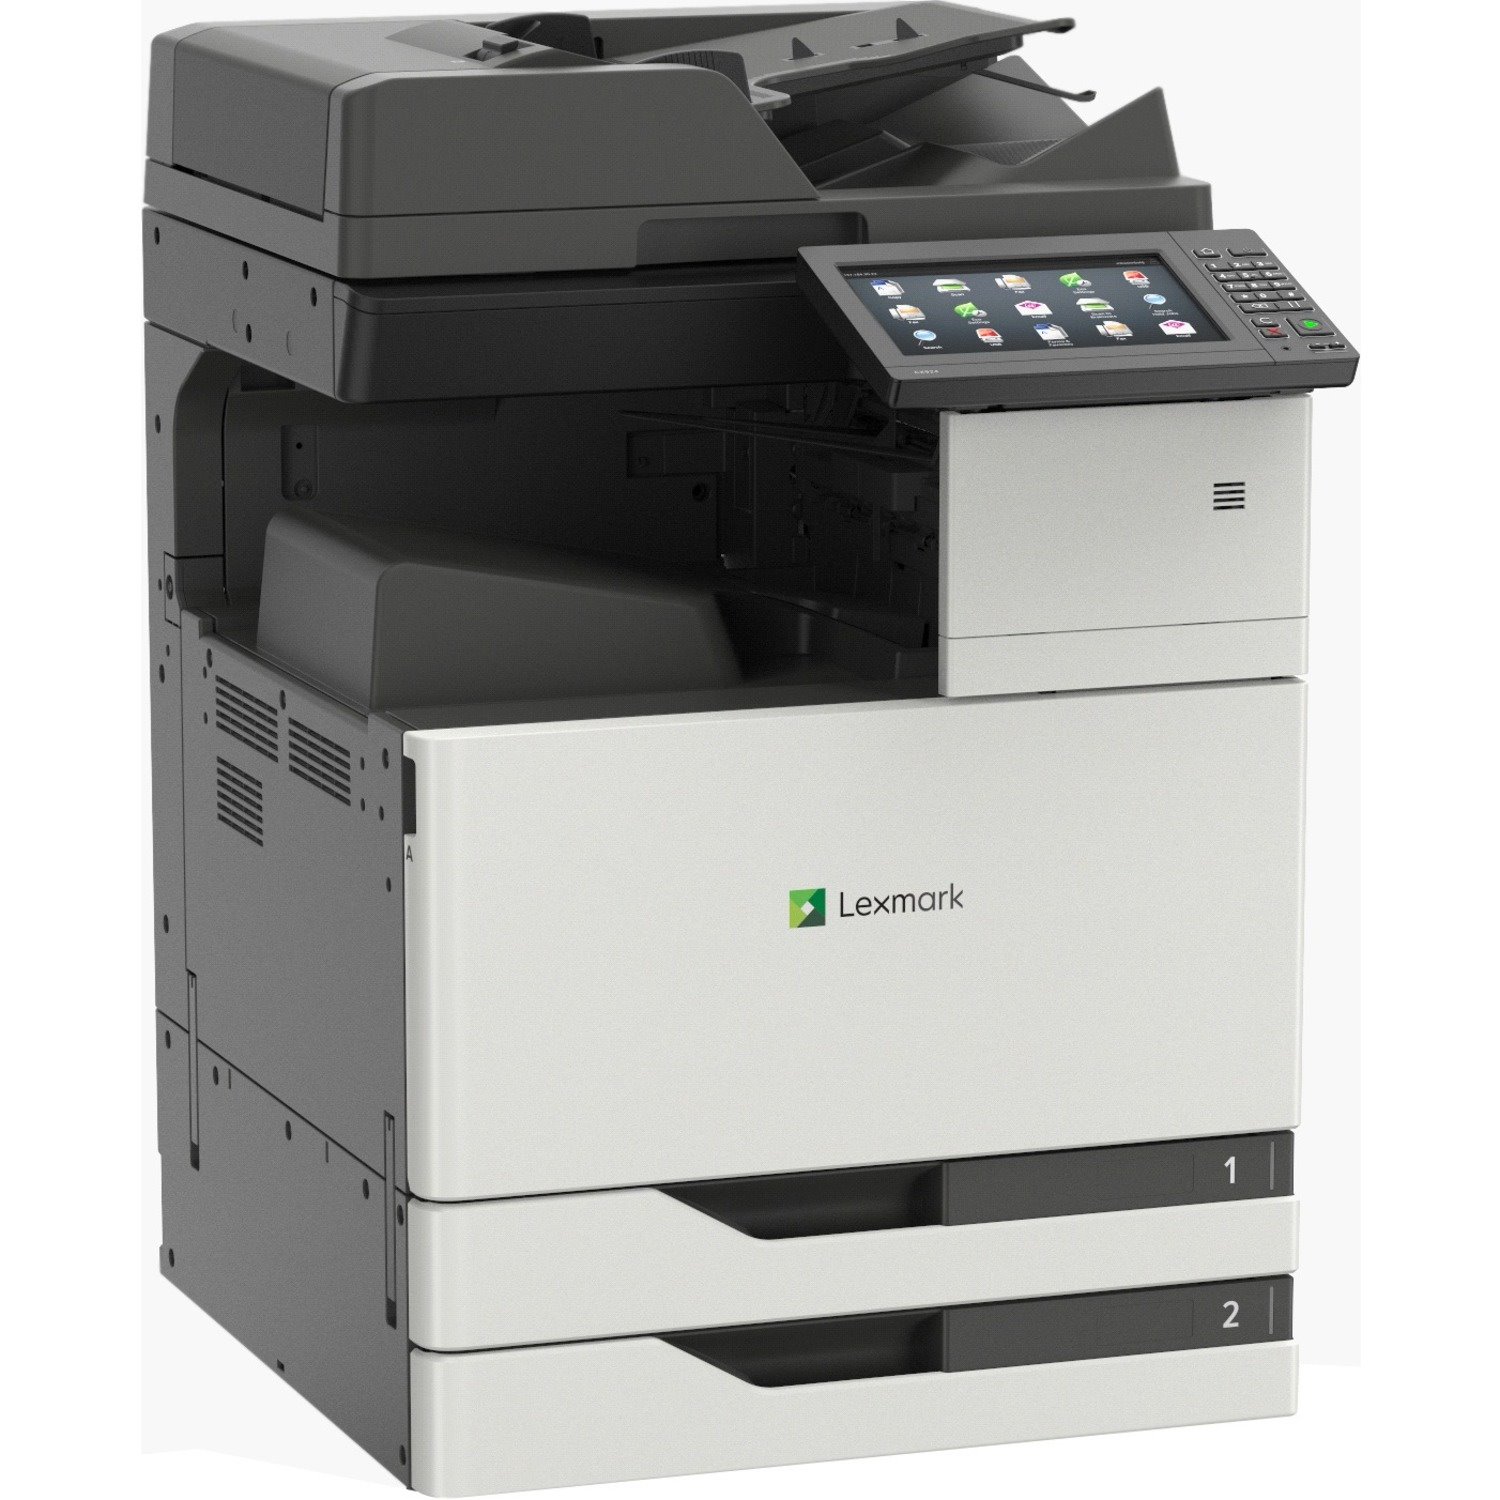 Lexmark CX920de Laser Multifunction Printer - Color